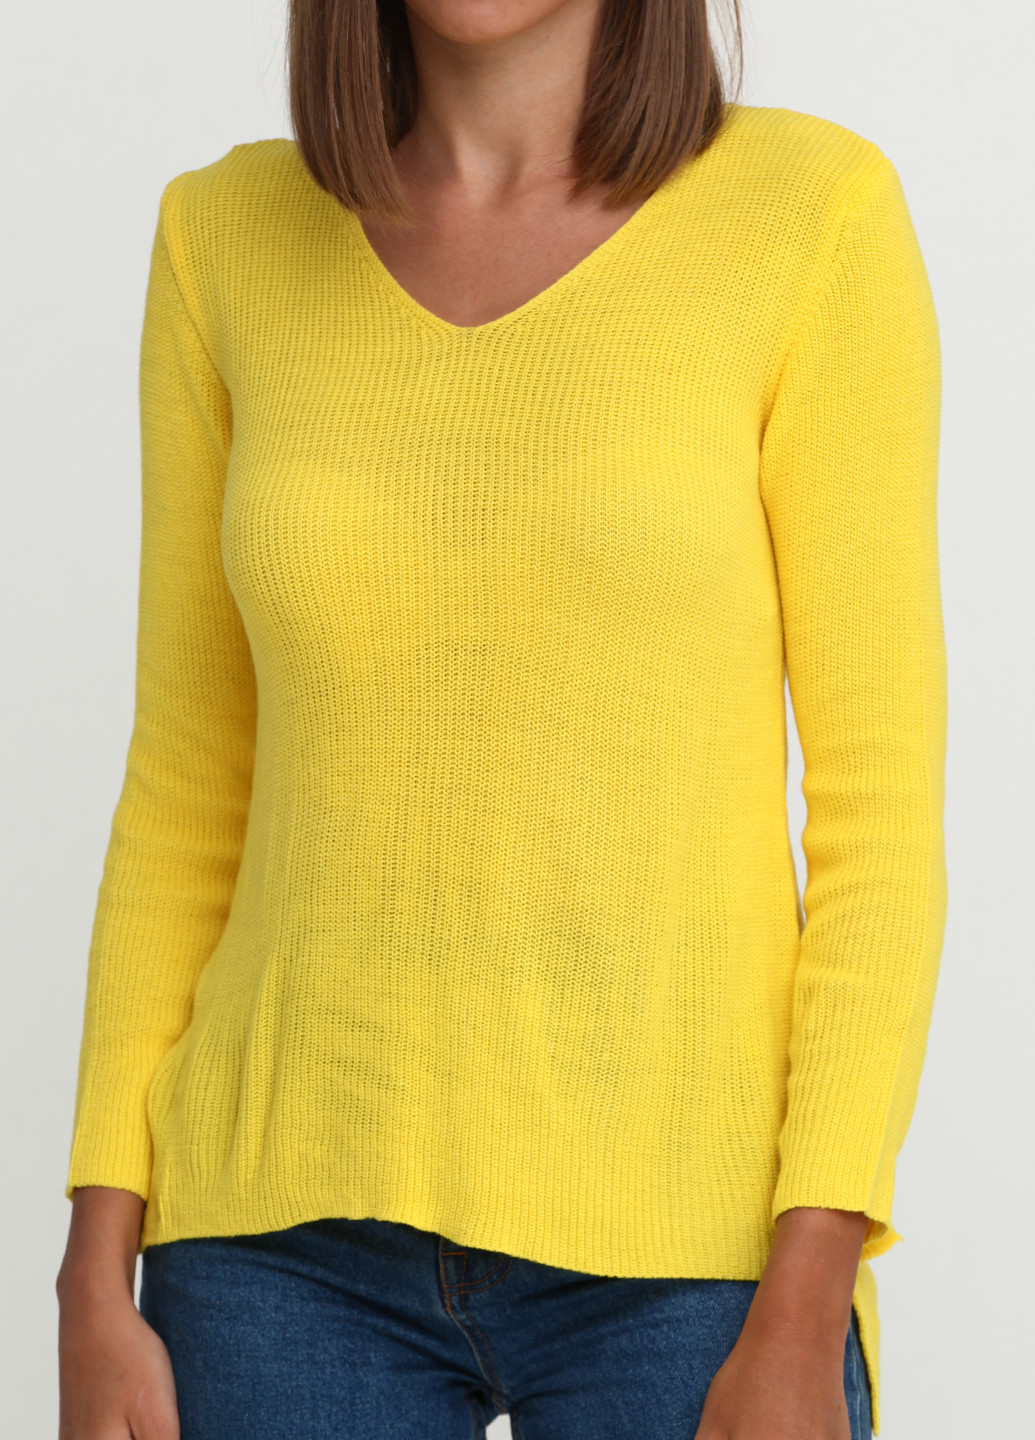 Желтый демисезонный пуловер пуловер Akdeniz